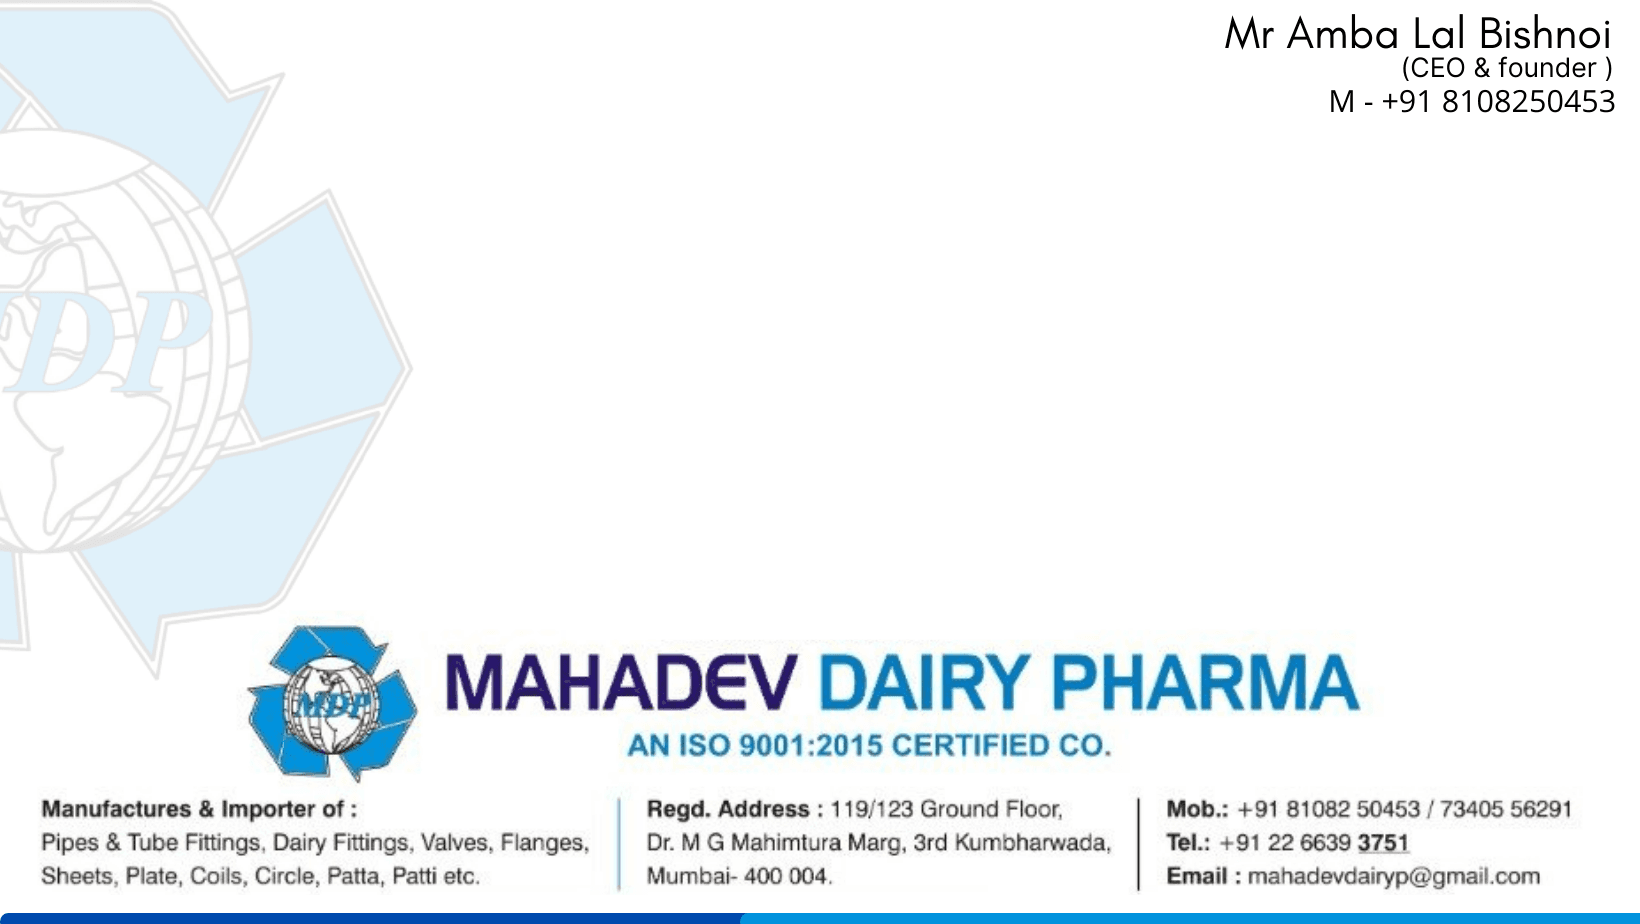 Mahadev Dairy Pharma Fitting